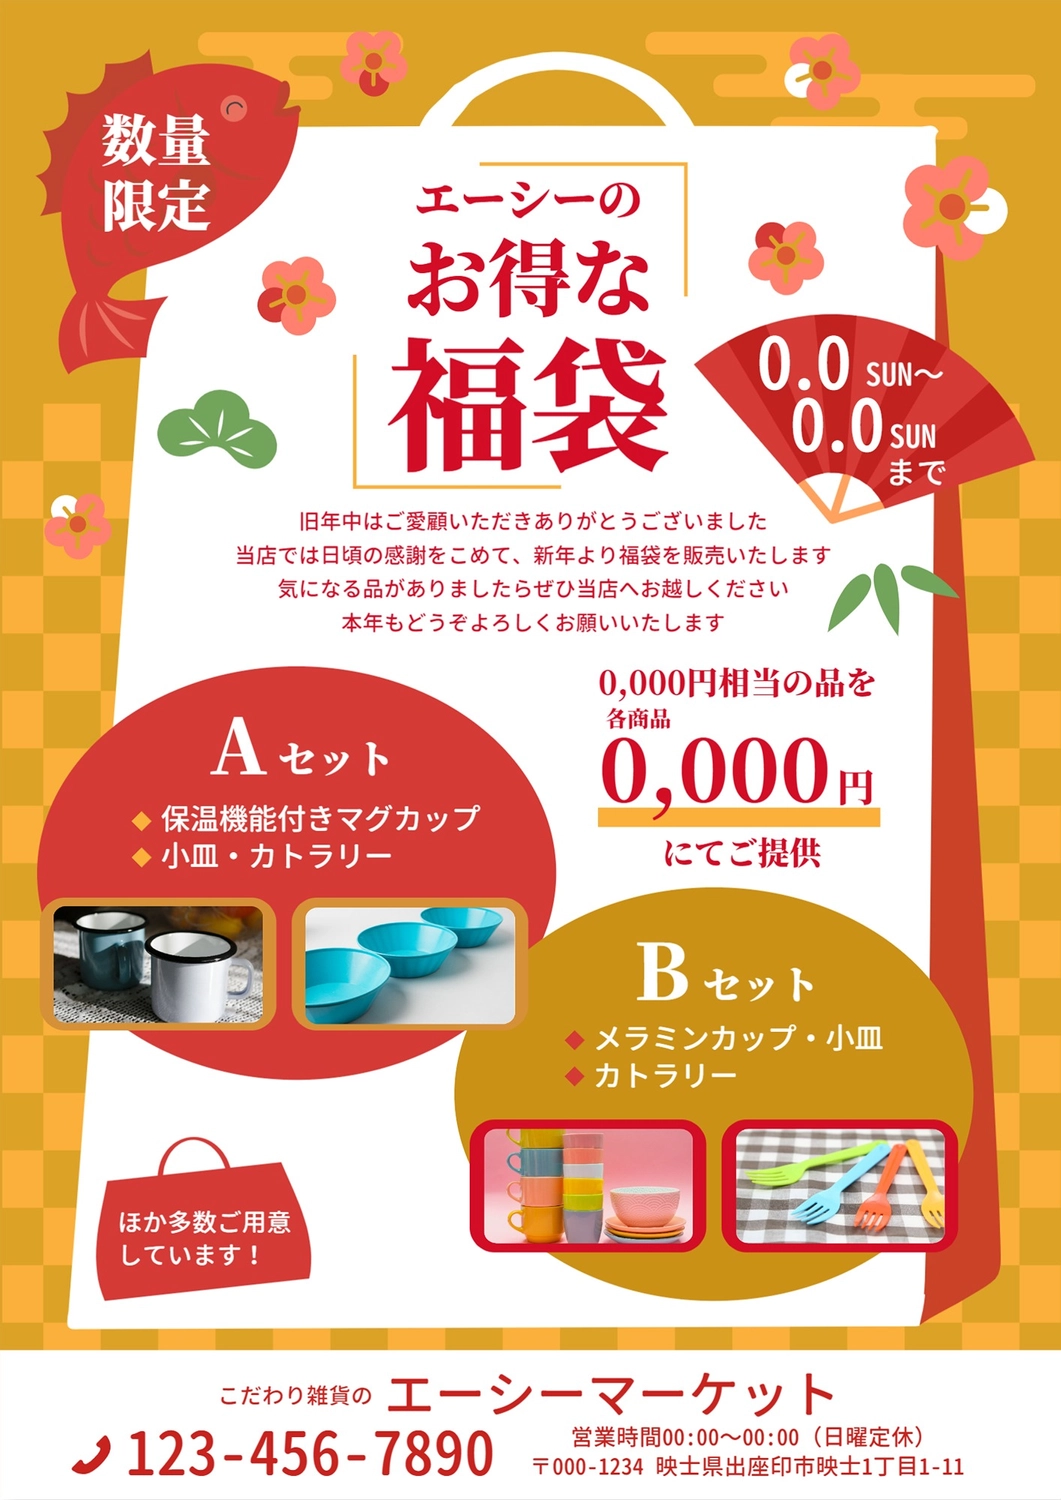 Aセット&Bセット福袋チラシ, Shochiku plum, printing, create, Flyer template